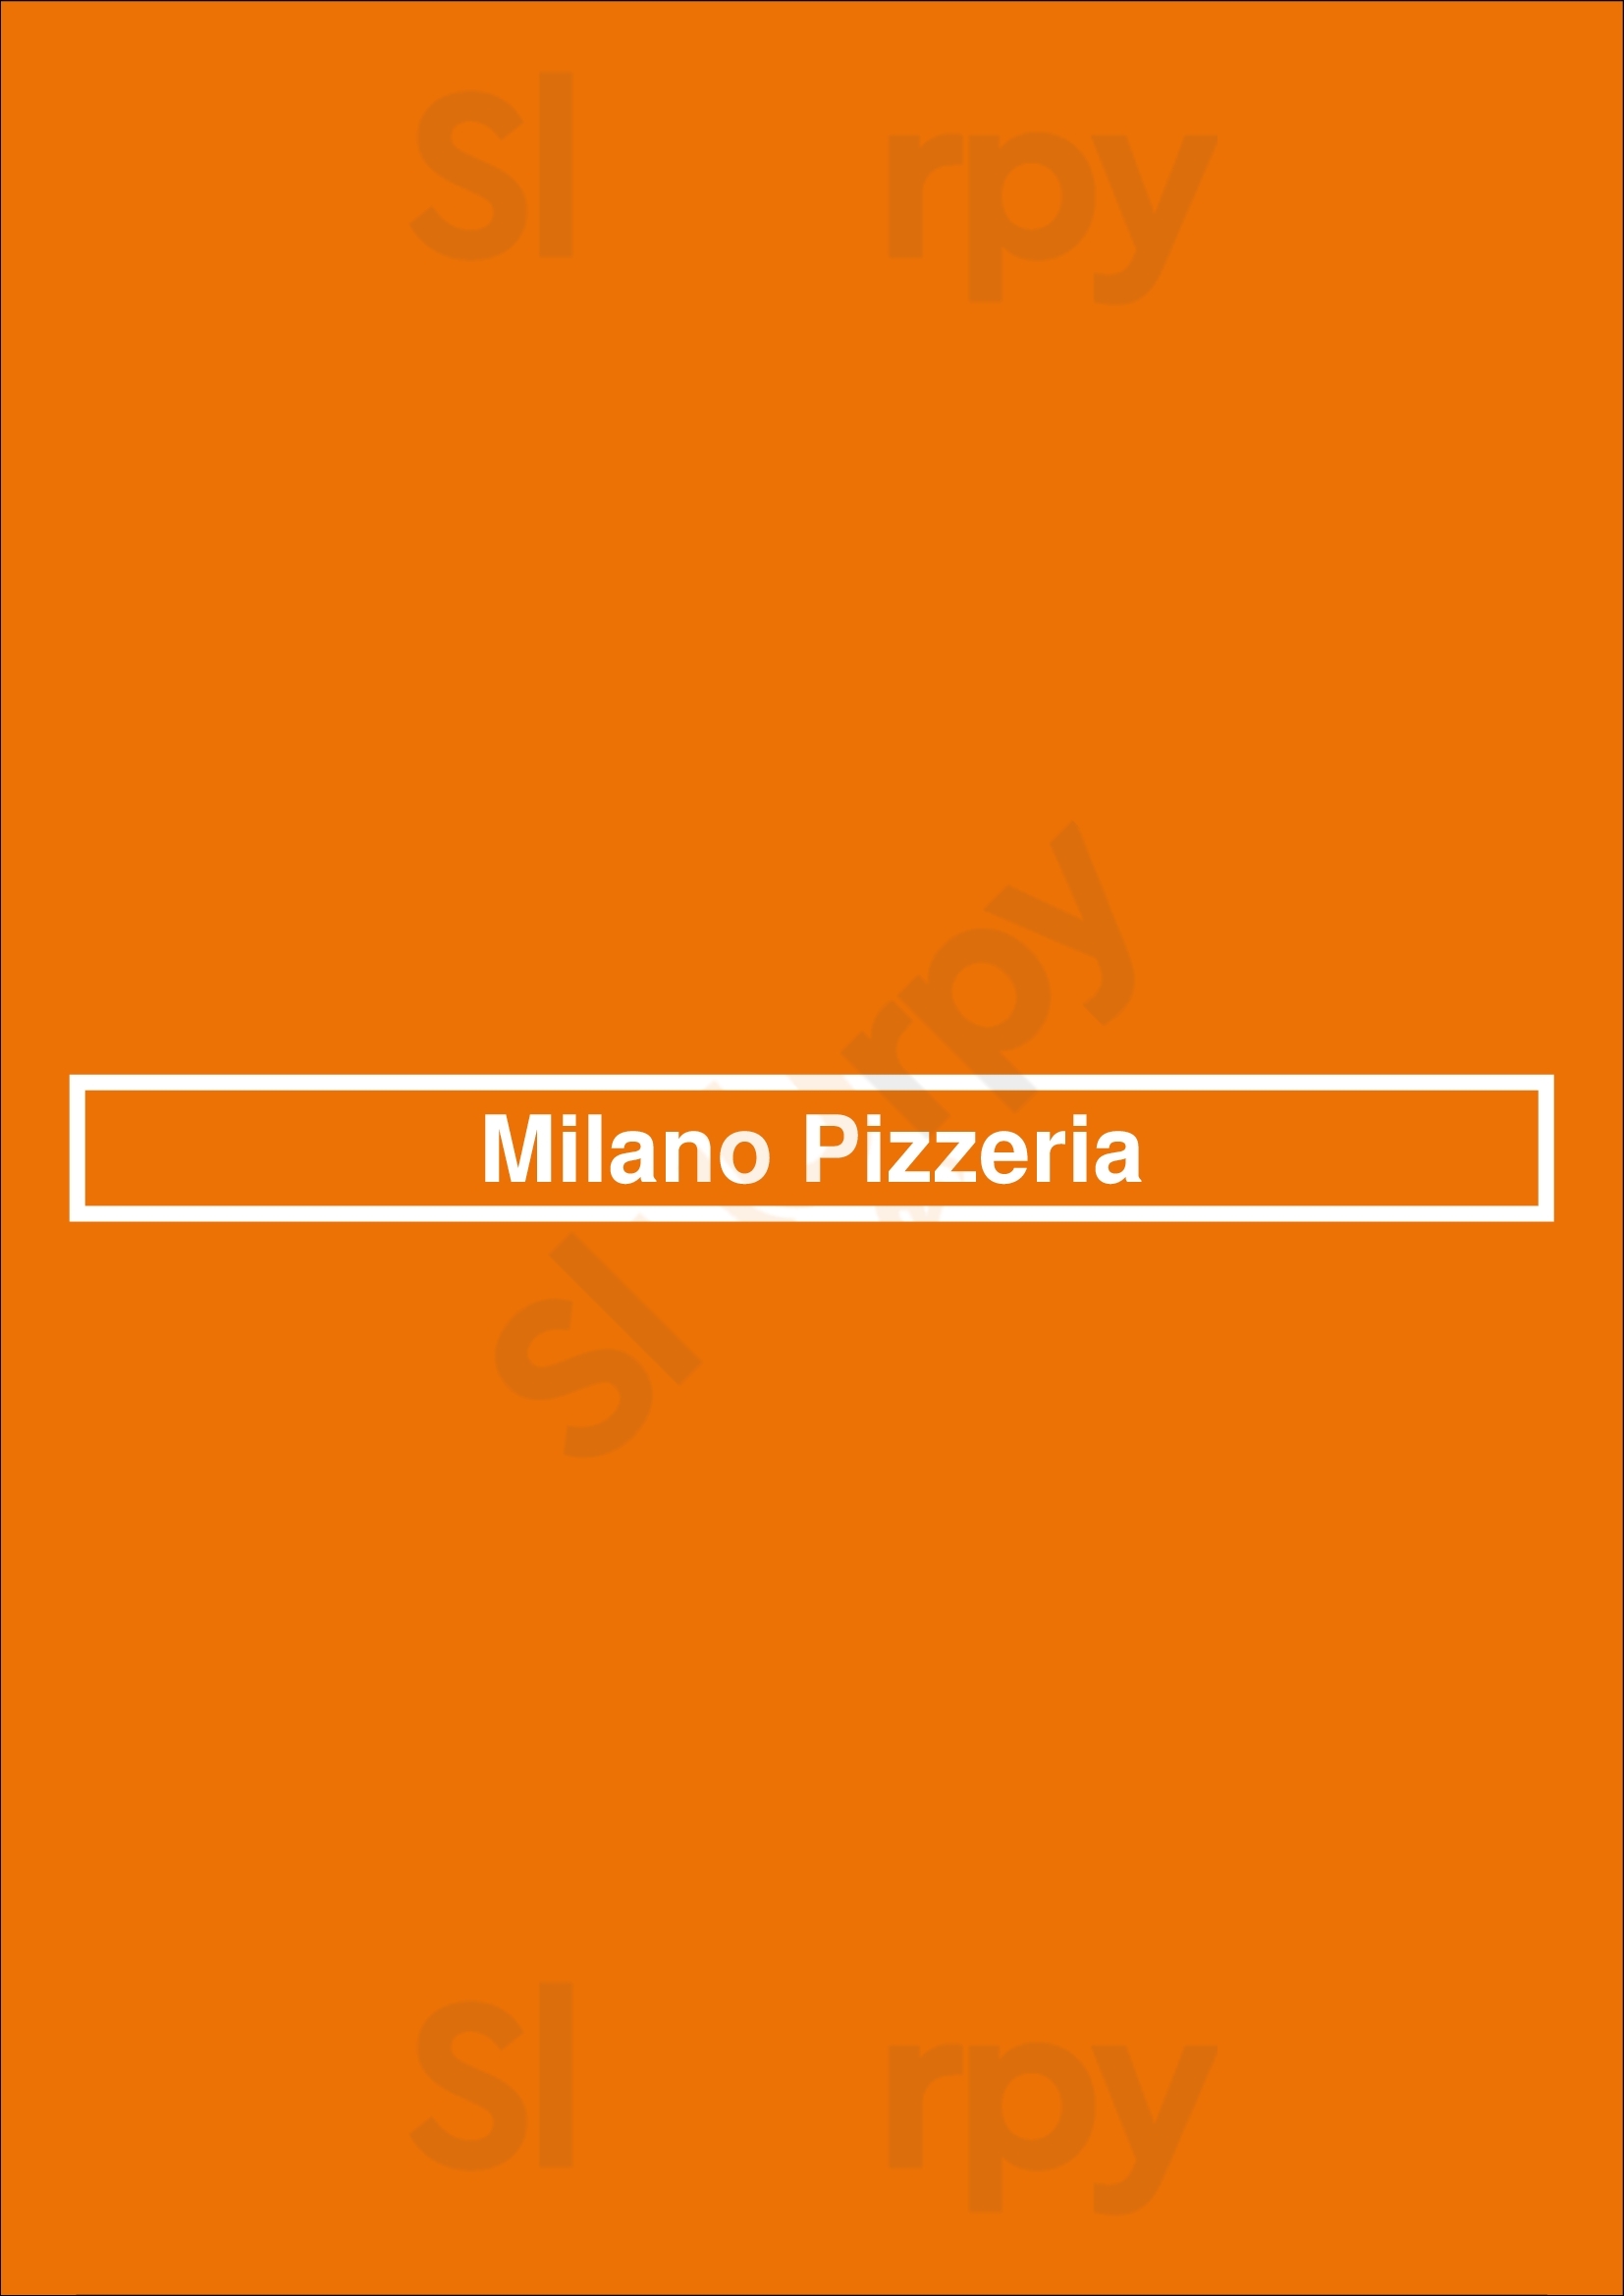 Milano Pizzeria Ottawa Menu - 1